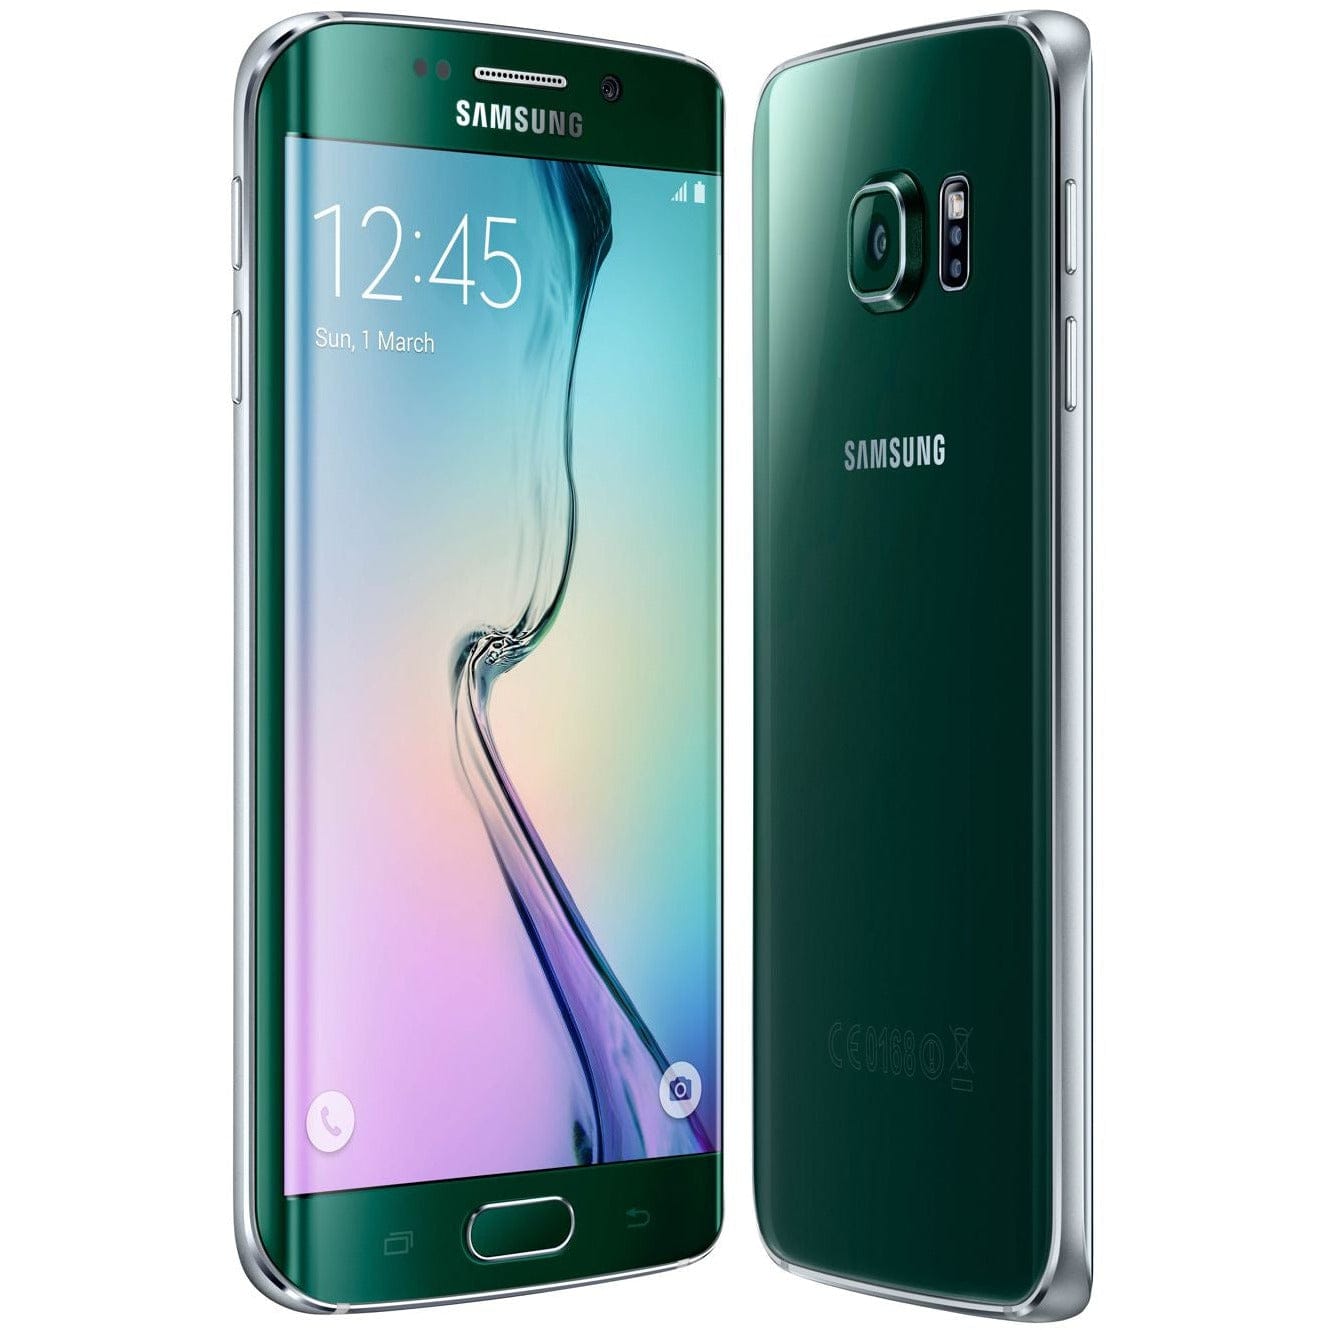 Samsung Galaxy S6 edge - 32 GB - Green - Unlocked - GSM